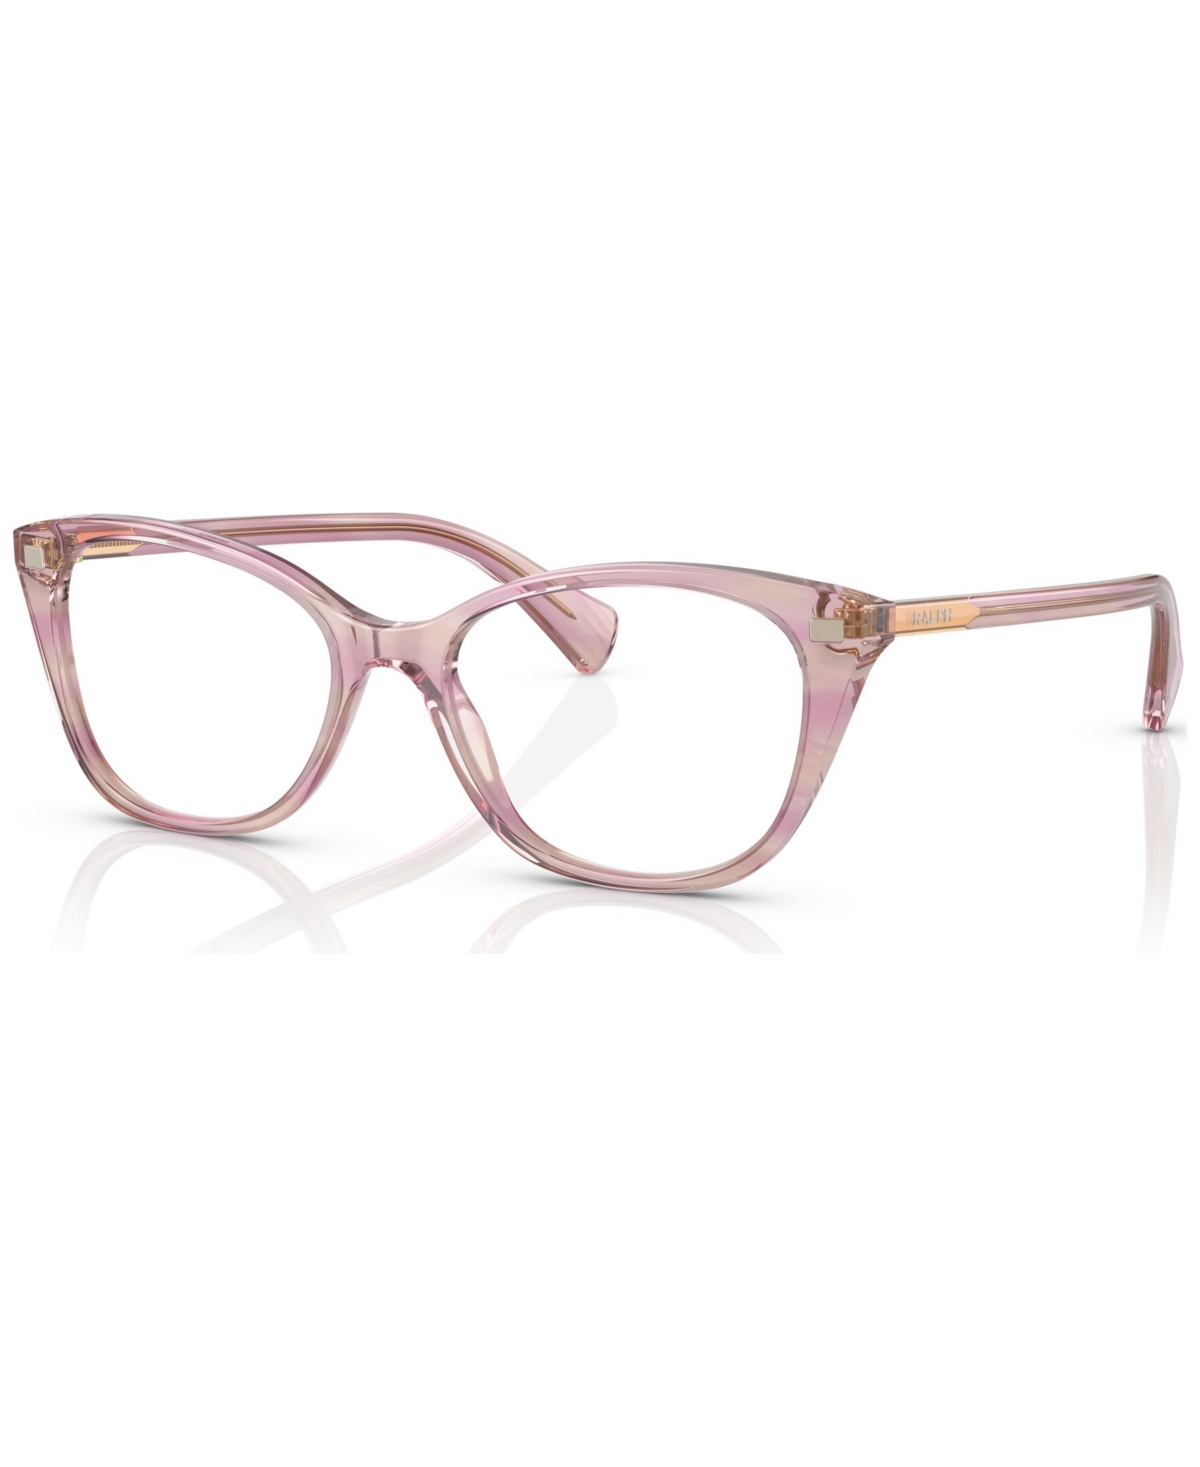 Women's Pillow Eyeglasses, RA714651-o - Pink